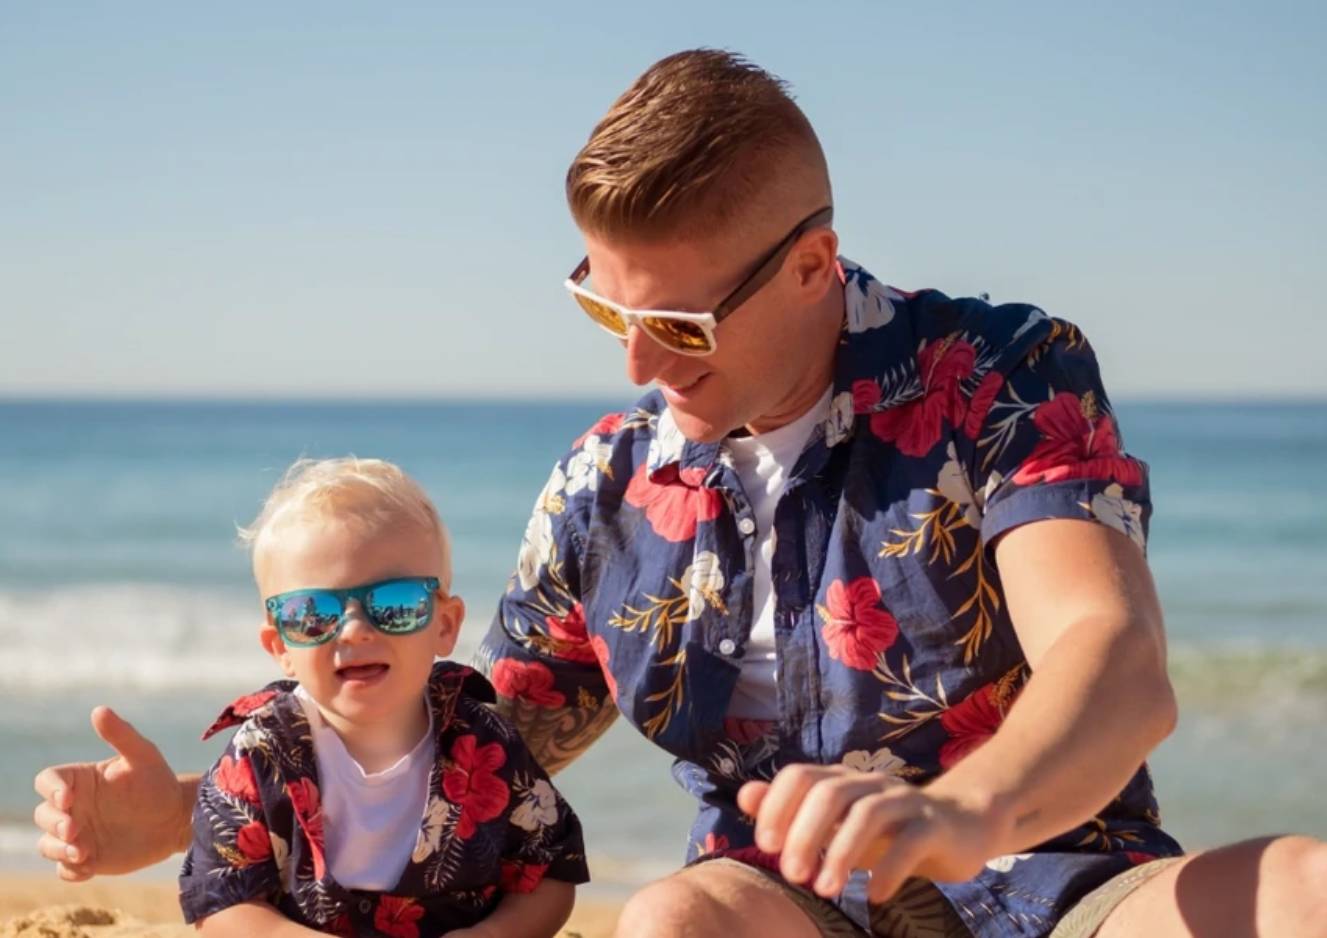 sunglasses are important for kids - Soek Sunglasses Australia